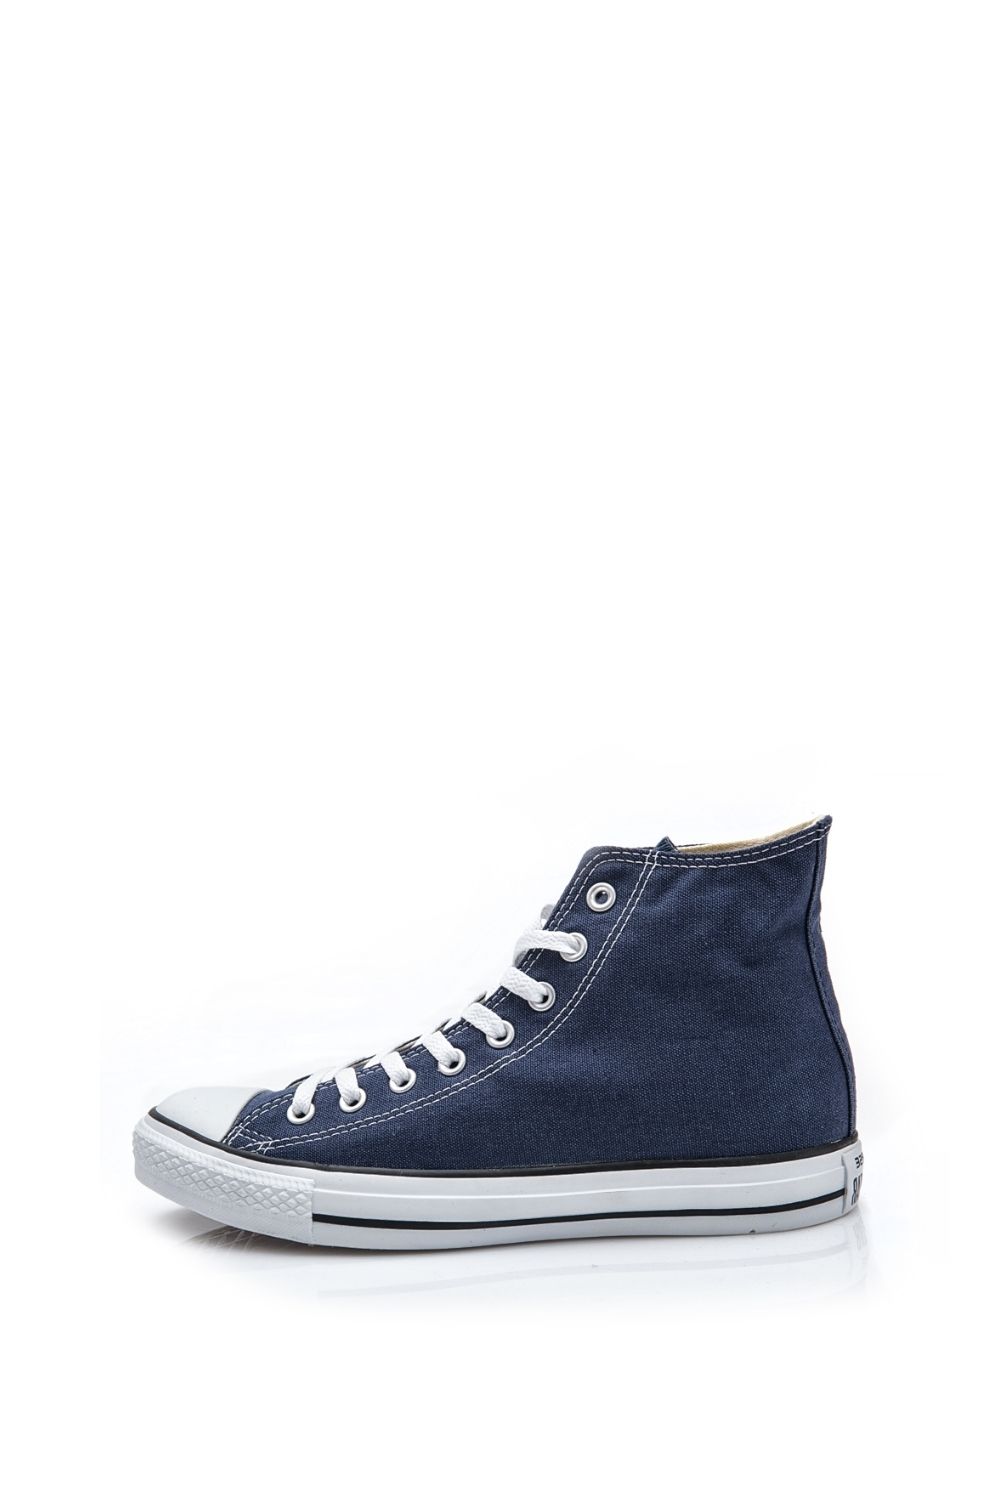 CONVERSE - Unisex μποτάκια Chuck Taylor μπλε Ανδρικά/Παπούτσια/Sneakers